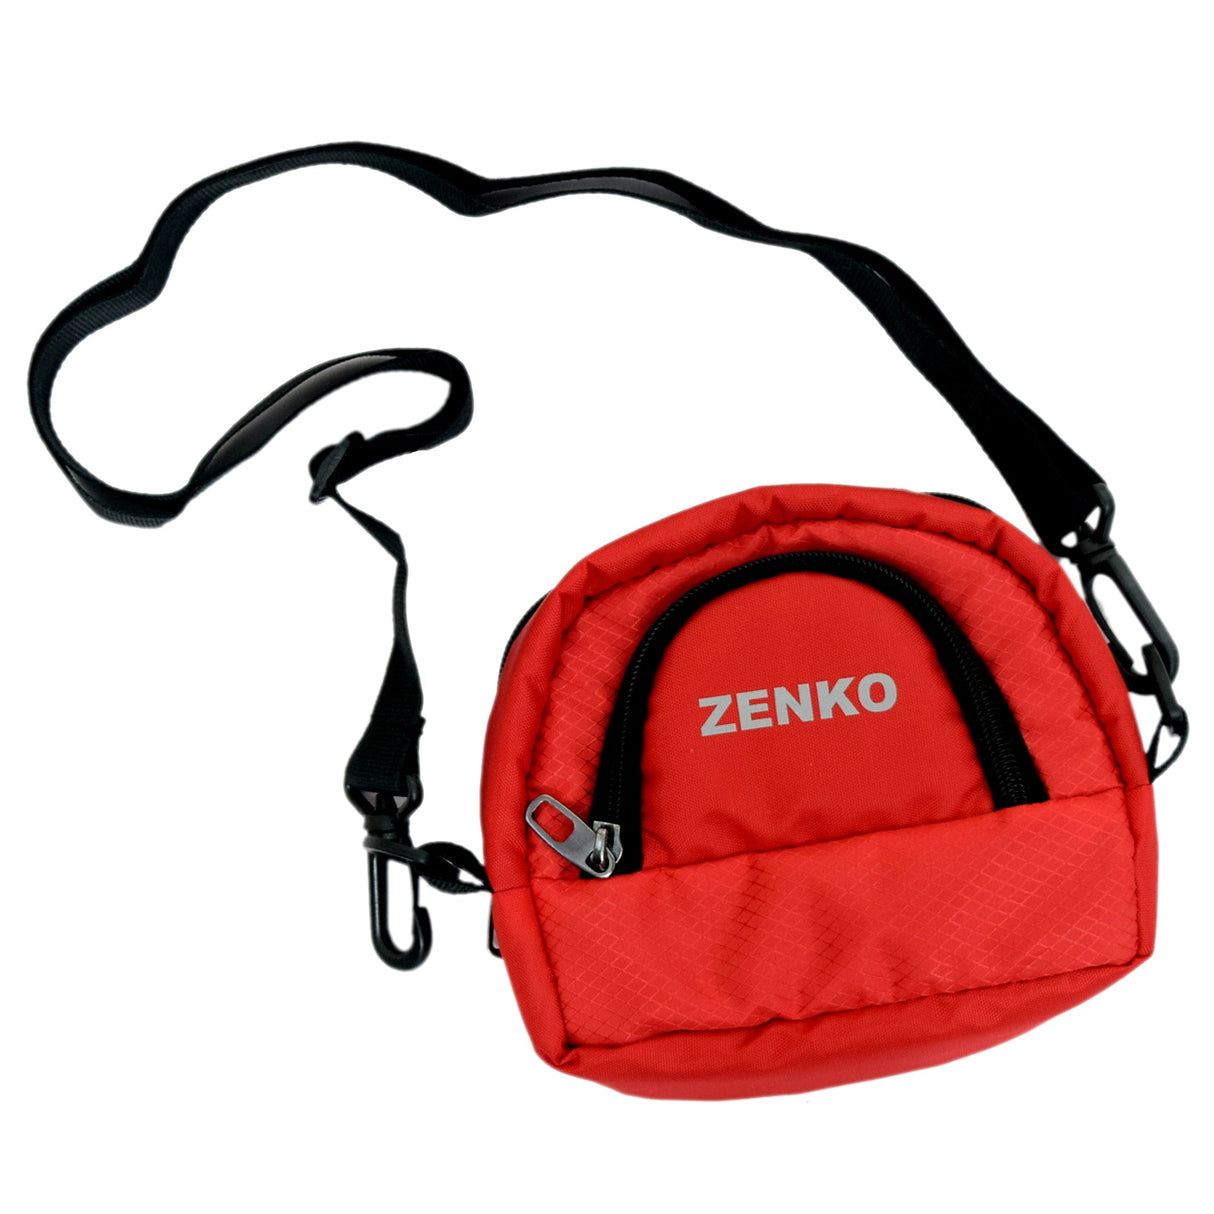 Zenko pouch for mini 50s instant camera bag Red